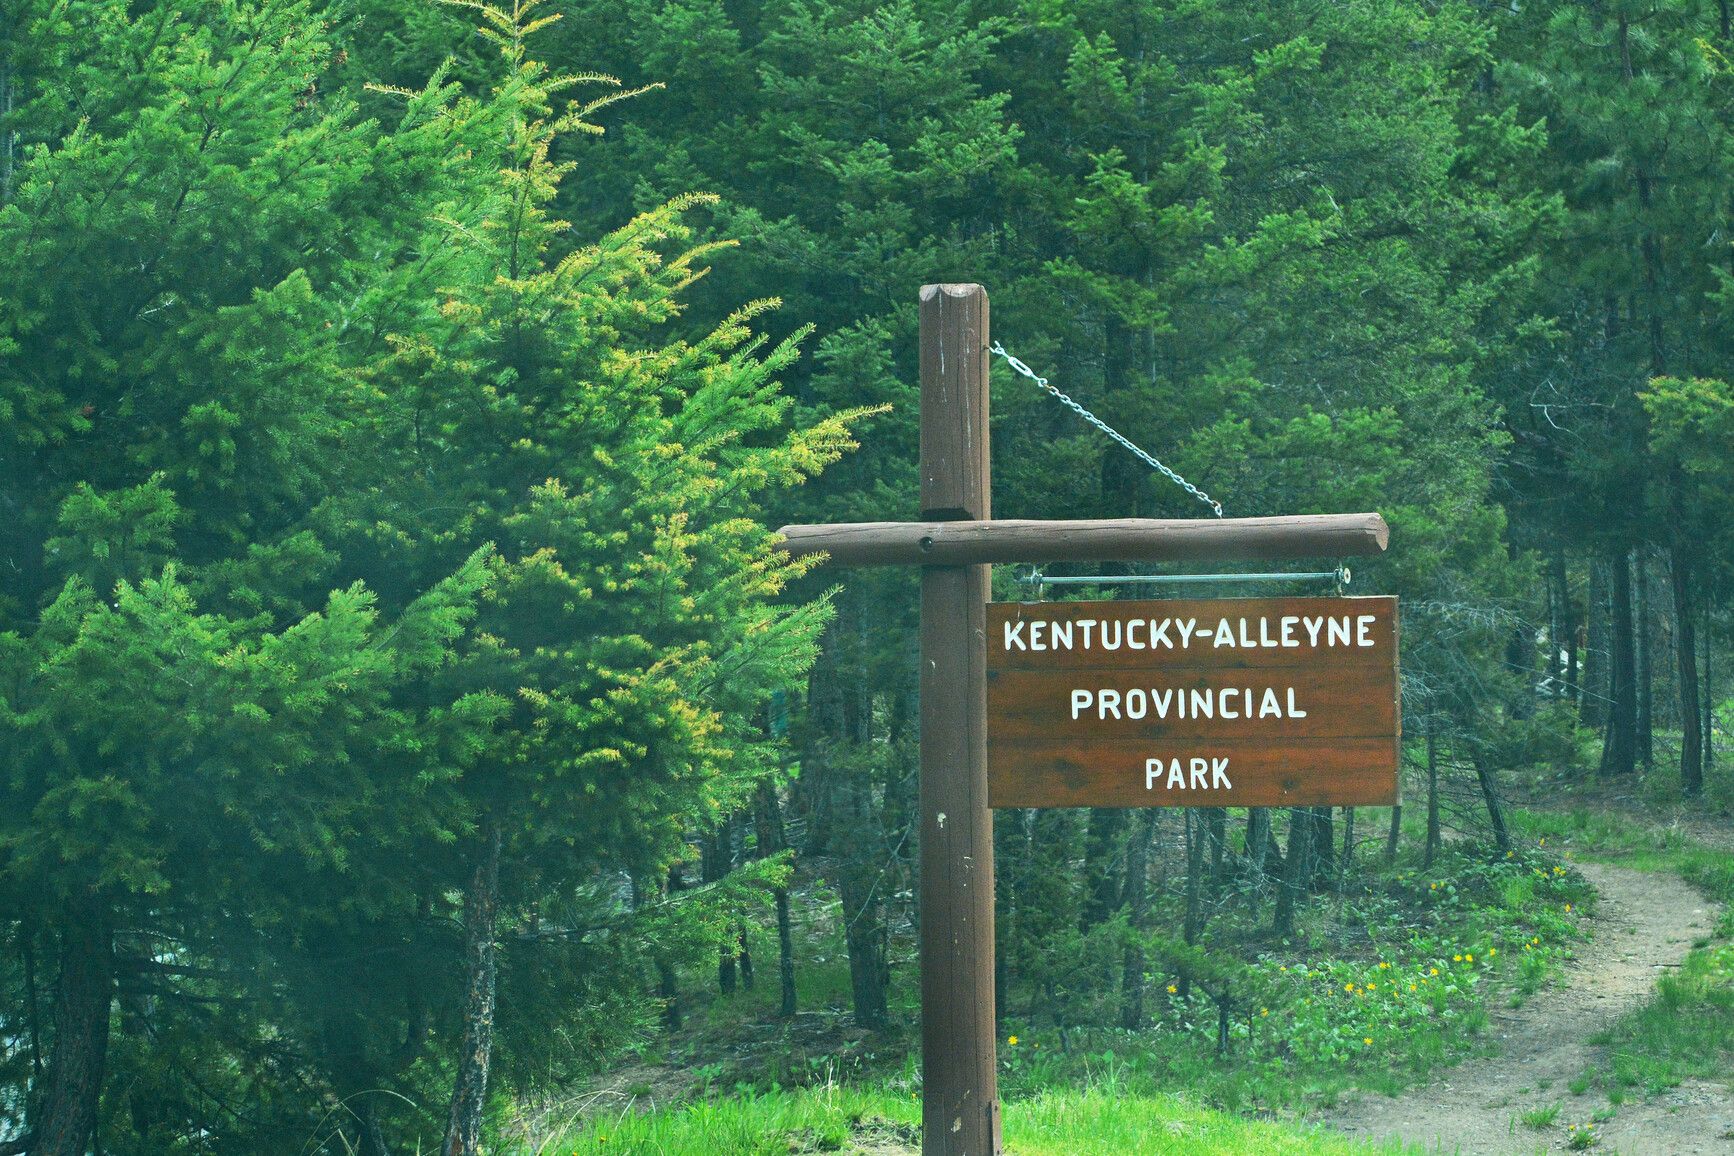 Kentucky-Alleyne Park entrance sign.